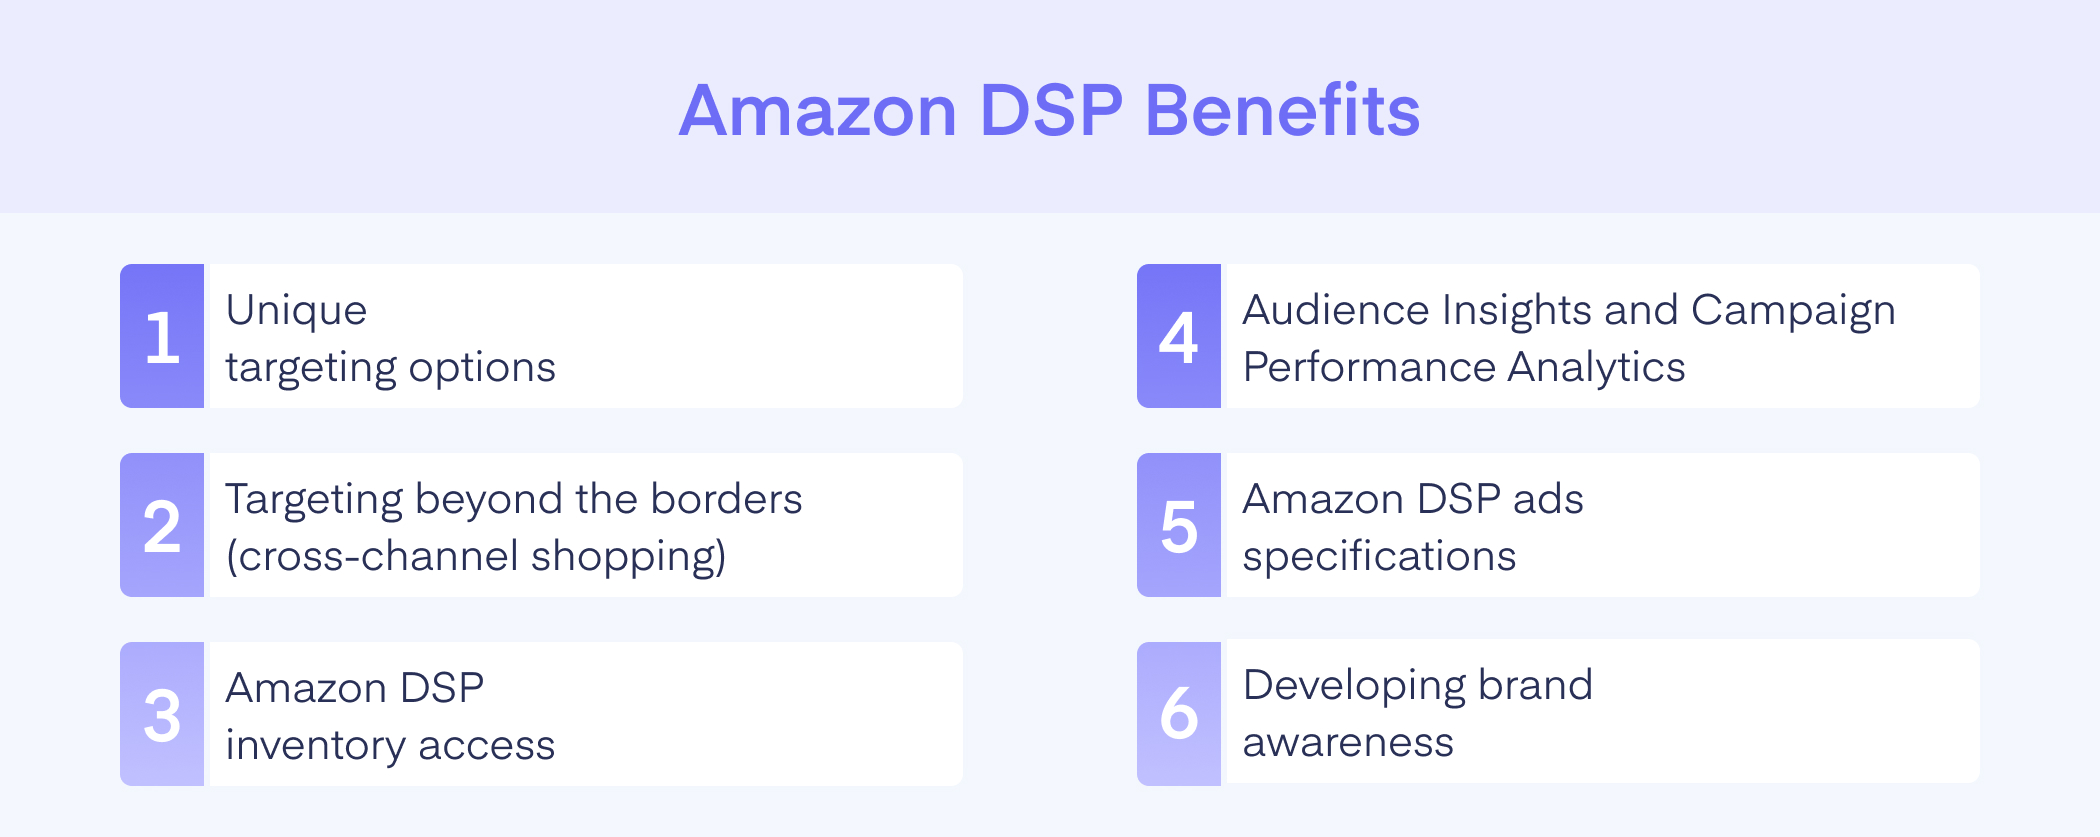 Amazon DSP Benefits